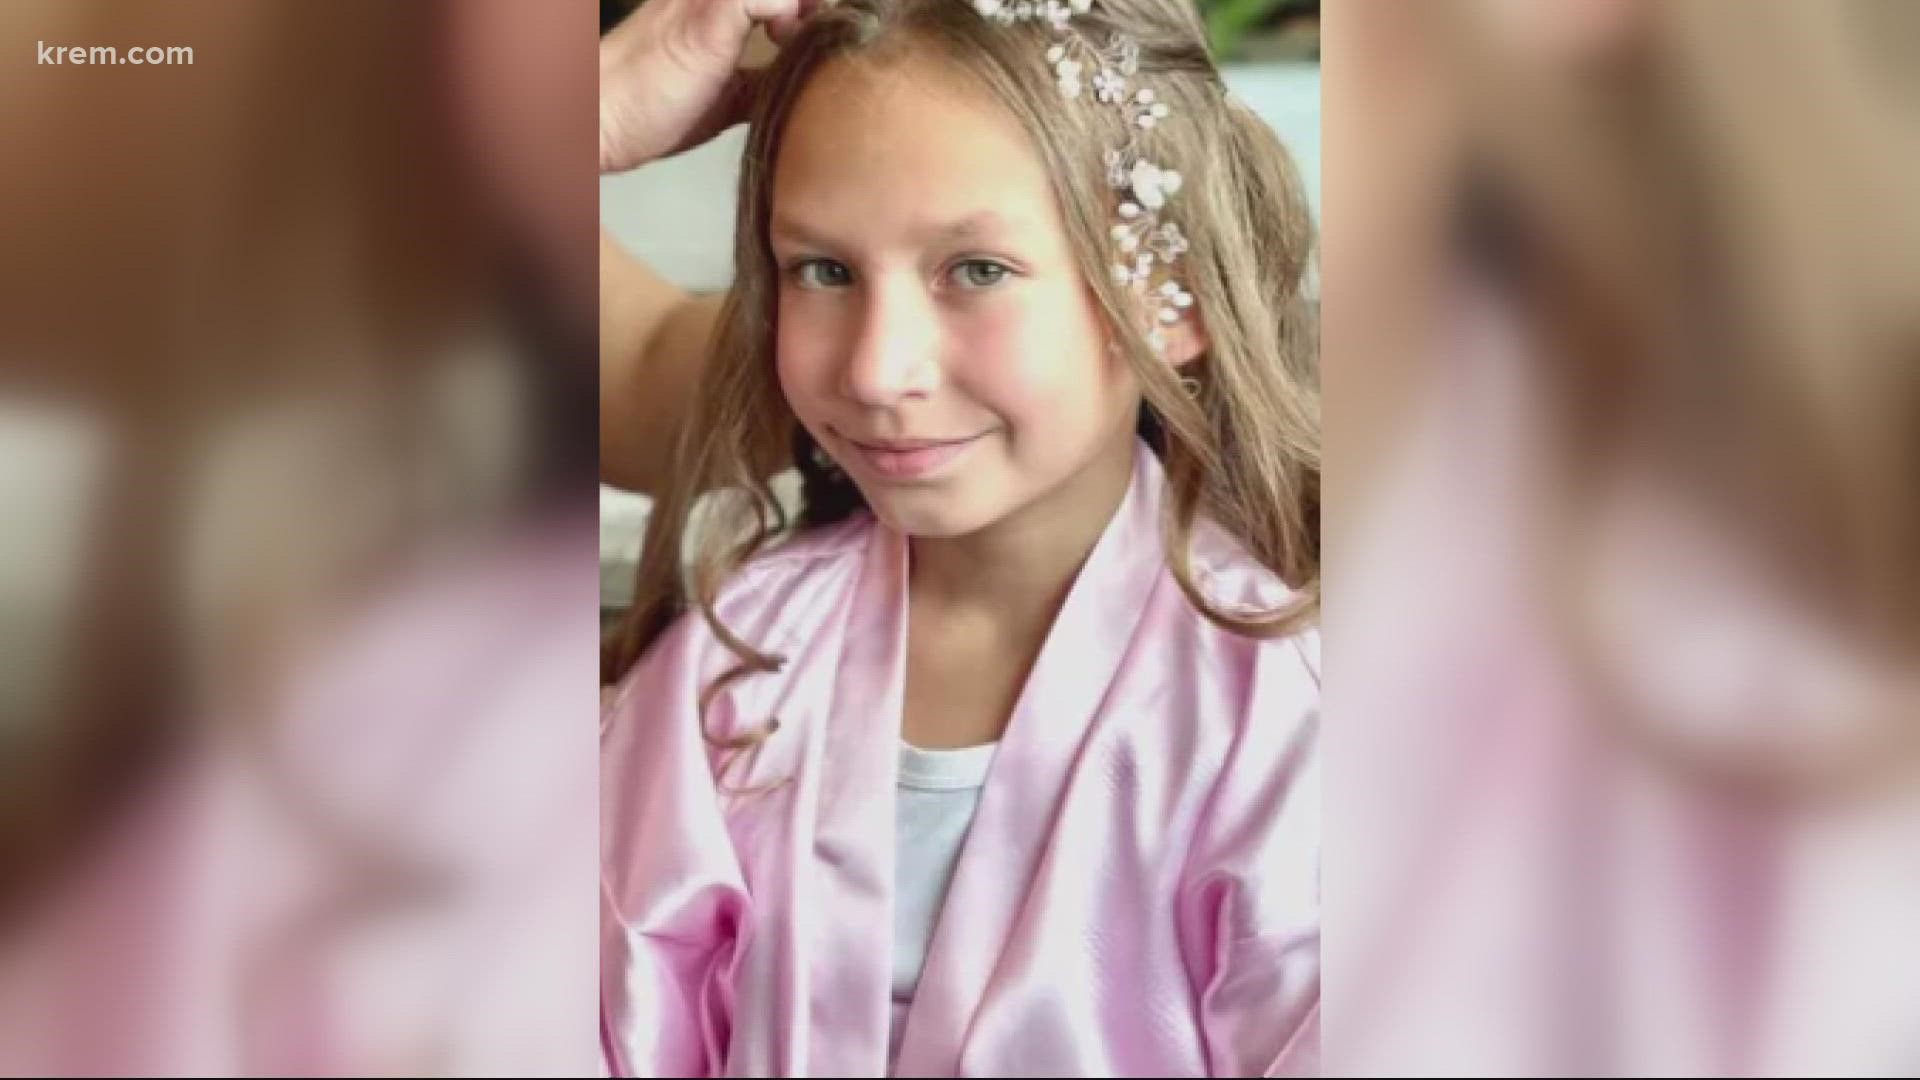 Cougar attacks 9-year-old girl in Washington